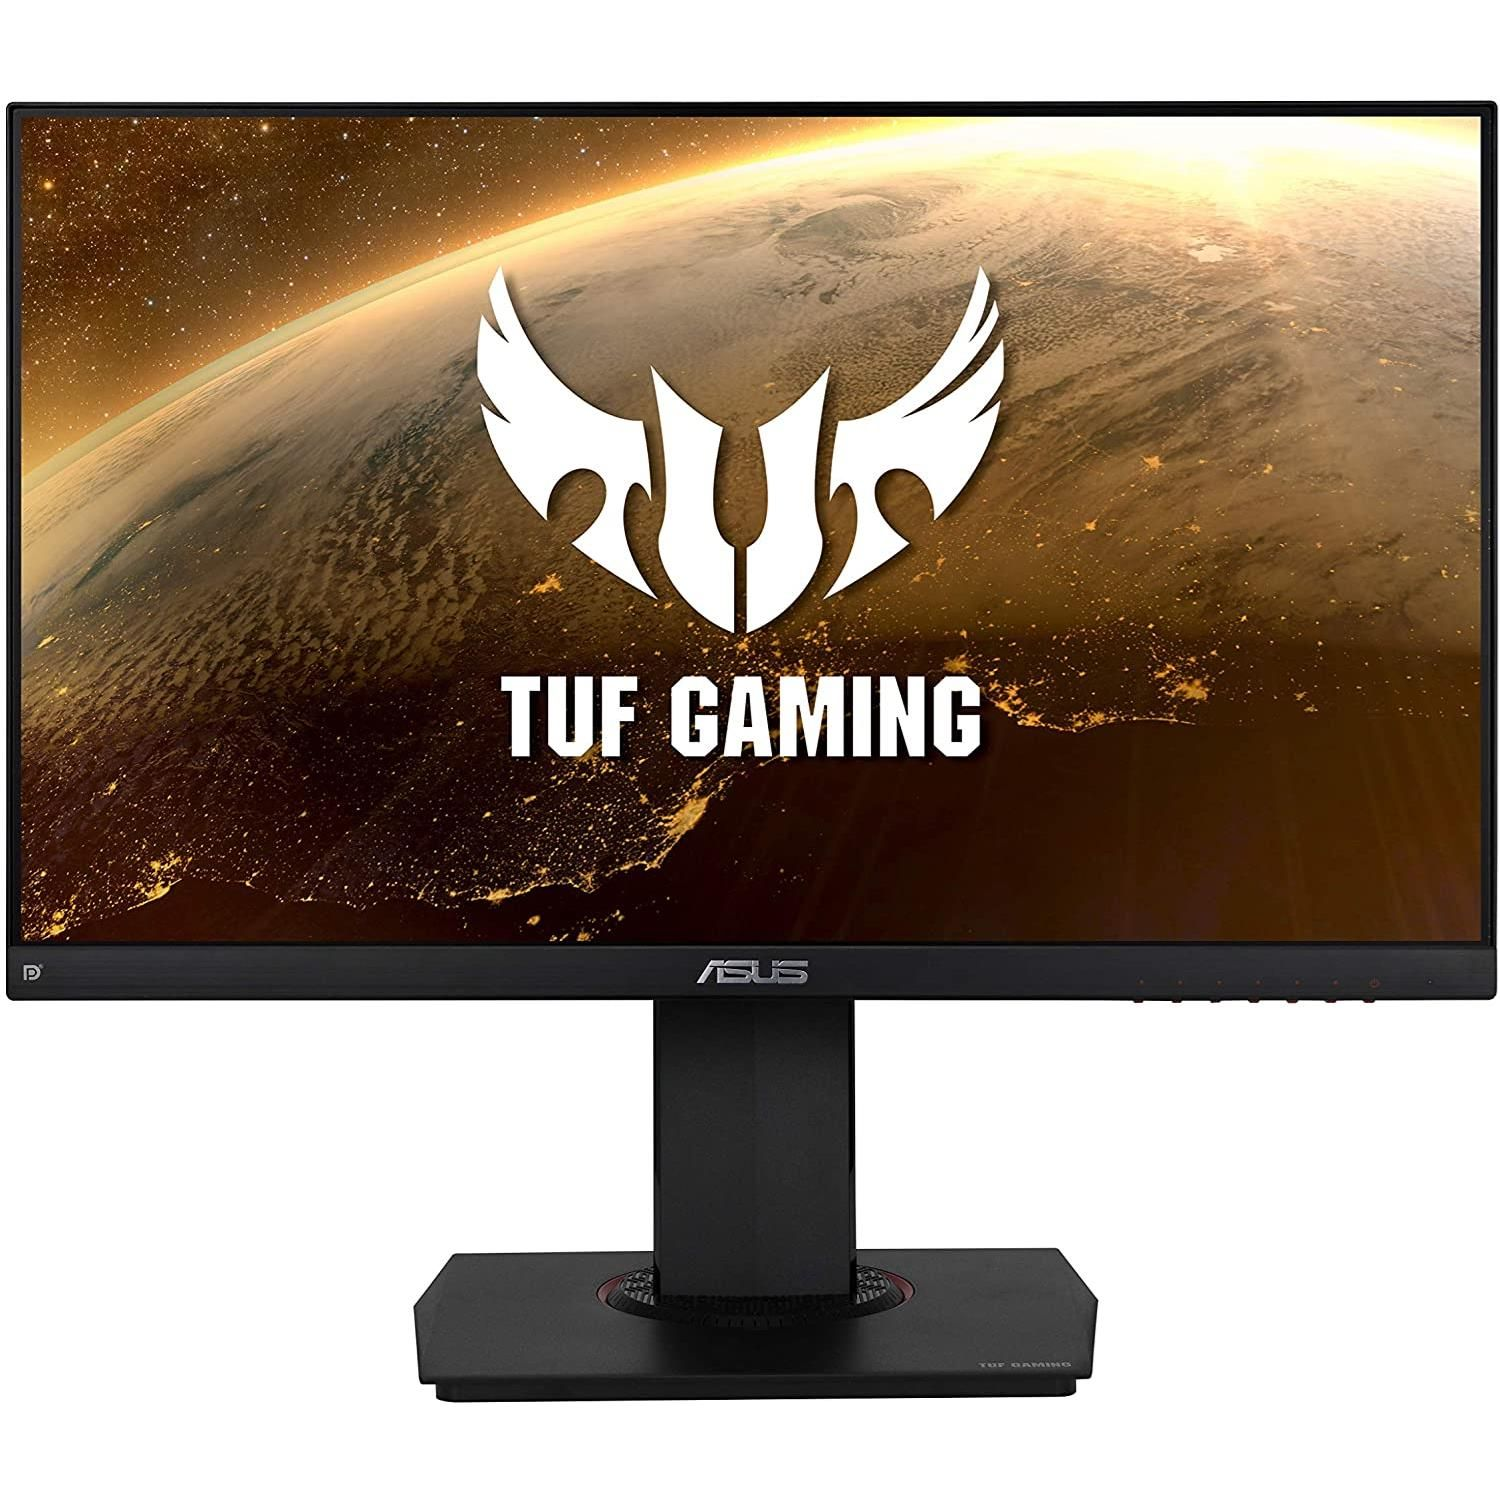 ASUS TUF Gaming Monitor 23,8 ms VG249Q Hz 144 nativ) Zoll , Full-HD , (1 Hz 144 Reaktionszeit